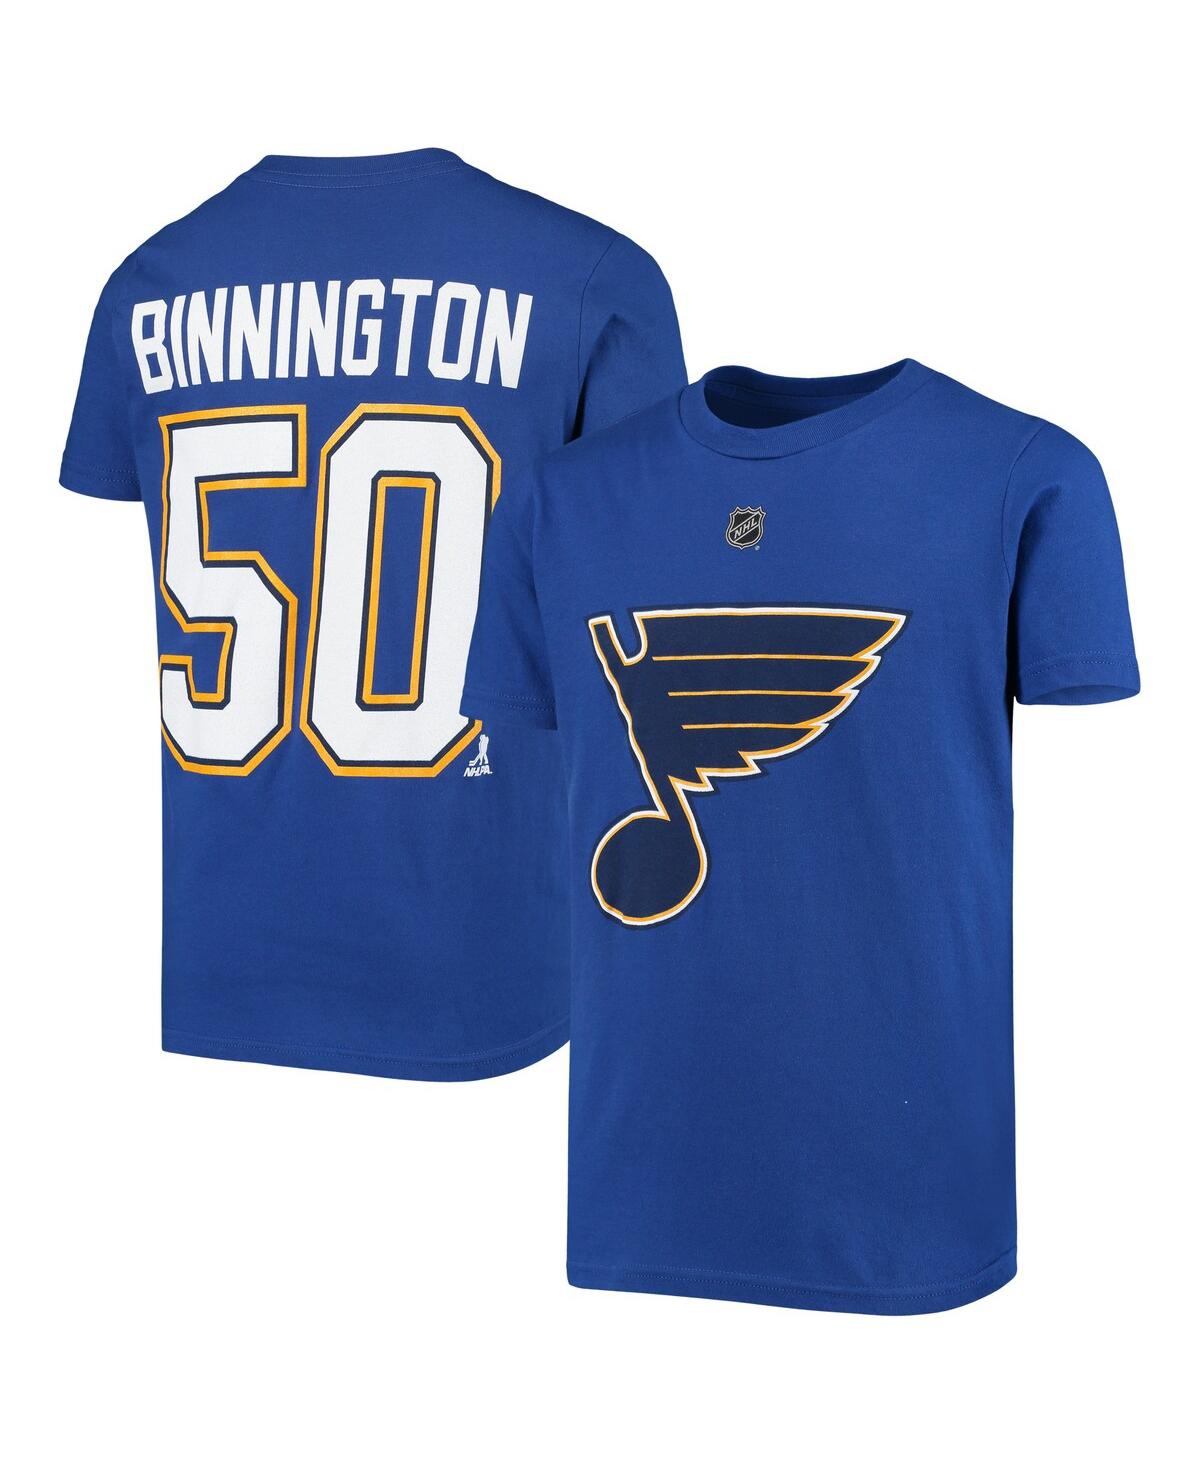 Outerstuff Kids' Big Boys Jordan Binnington Royal St. Louis Blues Player Name And Number T-shirt